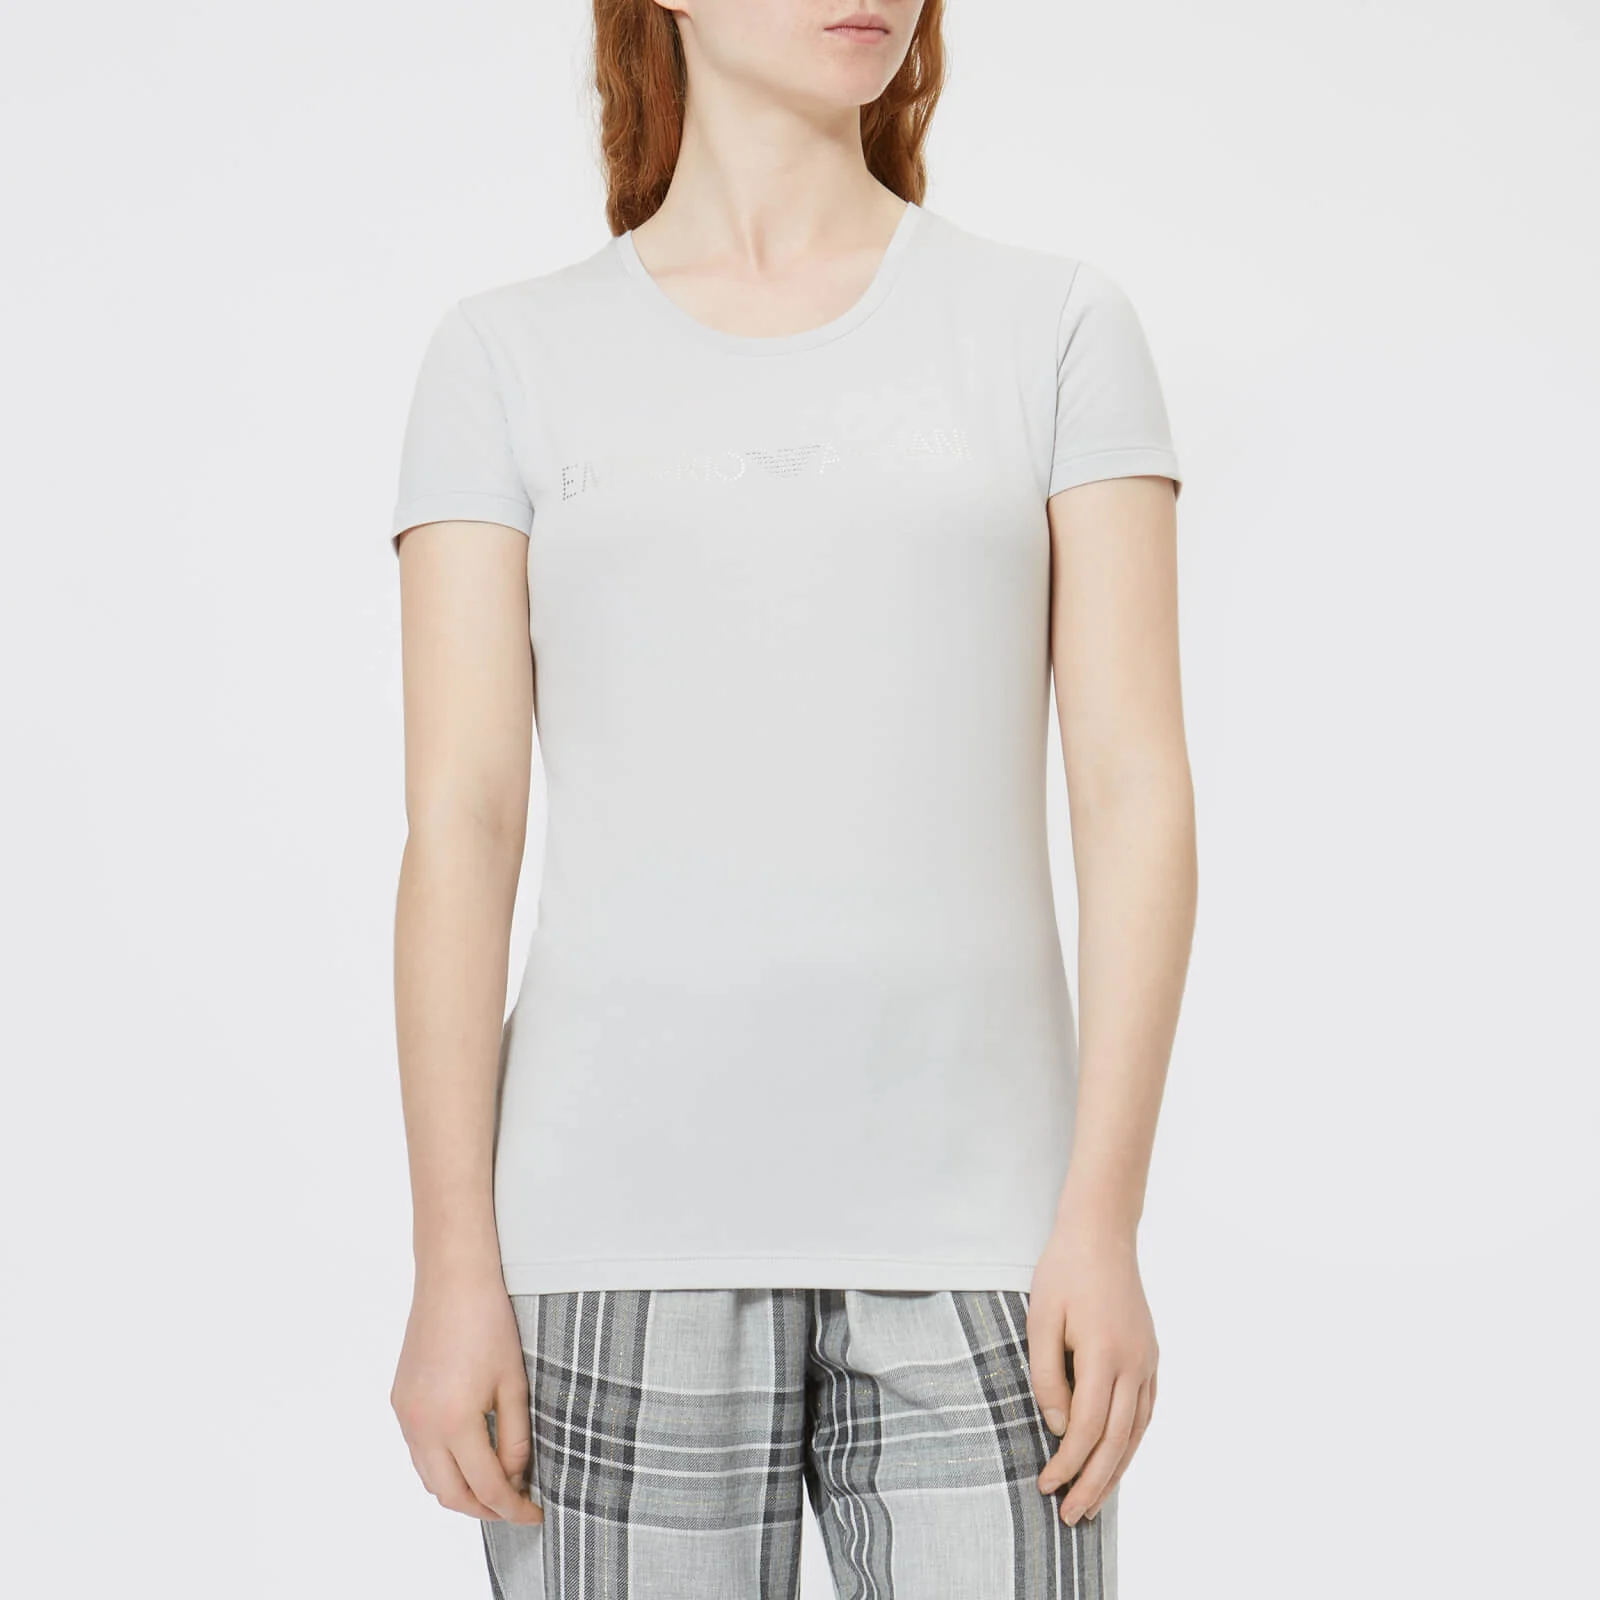 Emporio Armani Women's Basic Cotton T-Shirt - Silver Image 1